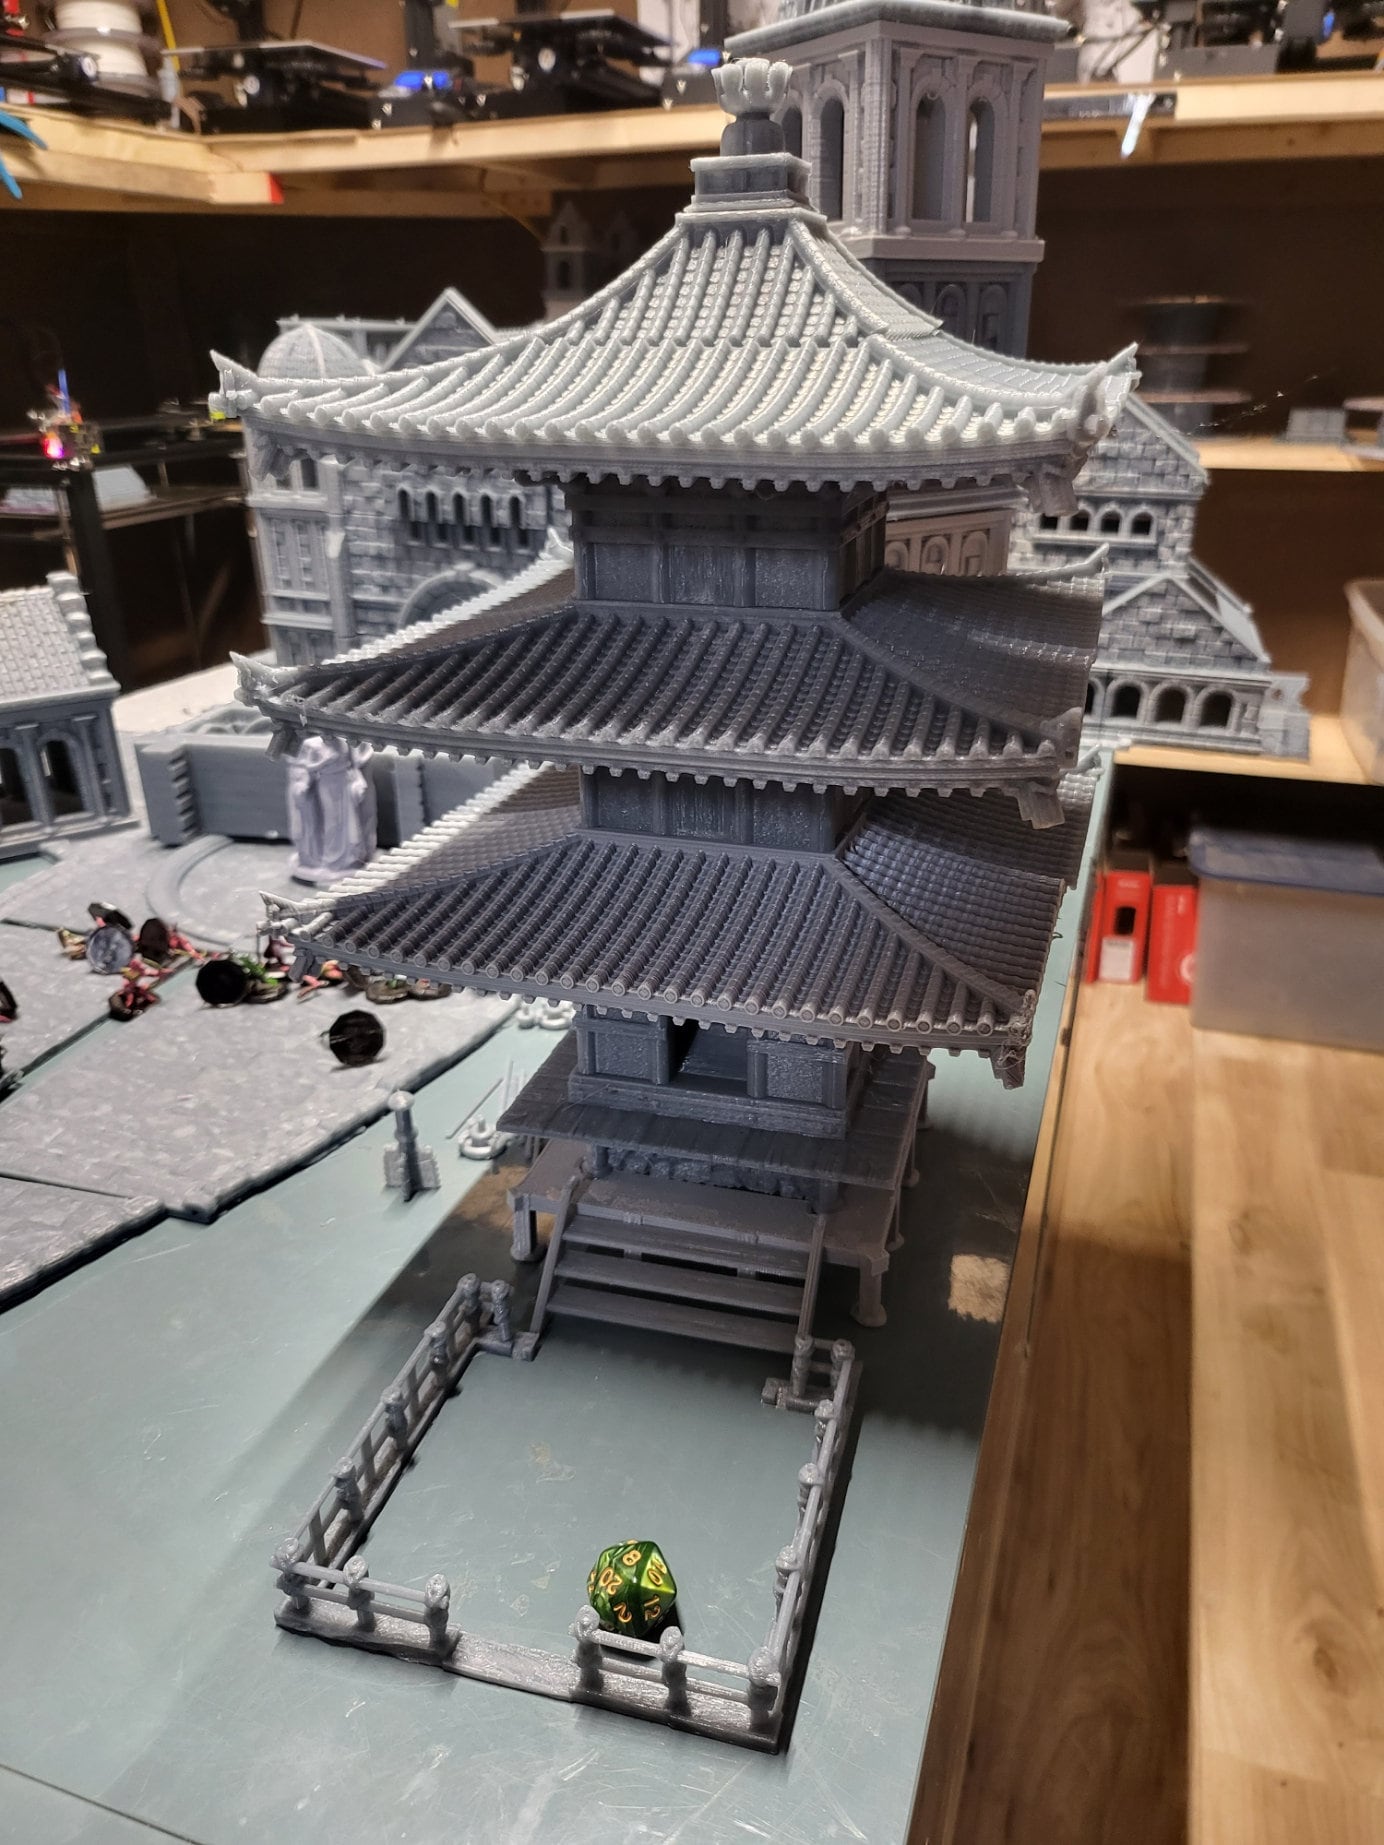 Samurai Dice Tower, Pagoda, DnD Miniature, Wargaming Terrain, Dungeons and Dragons